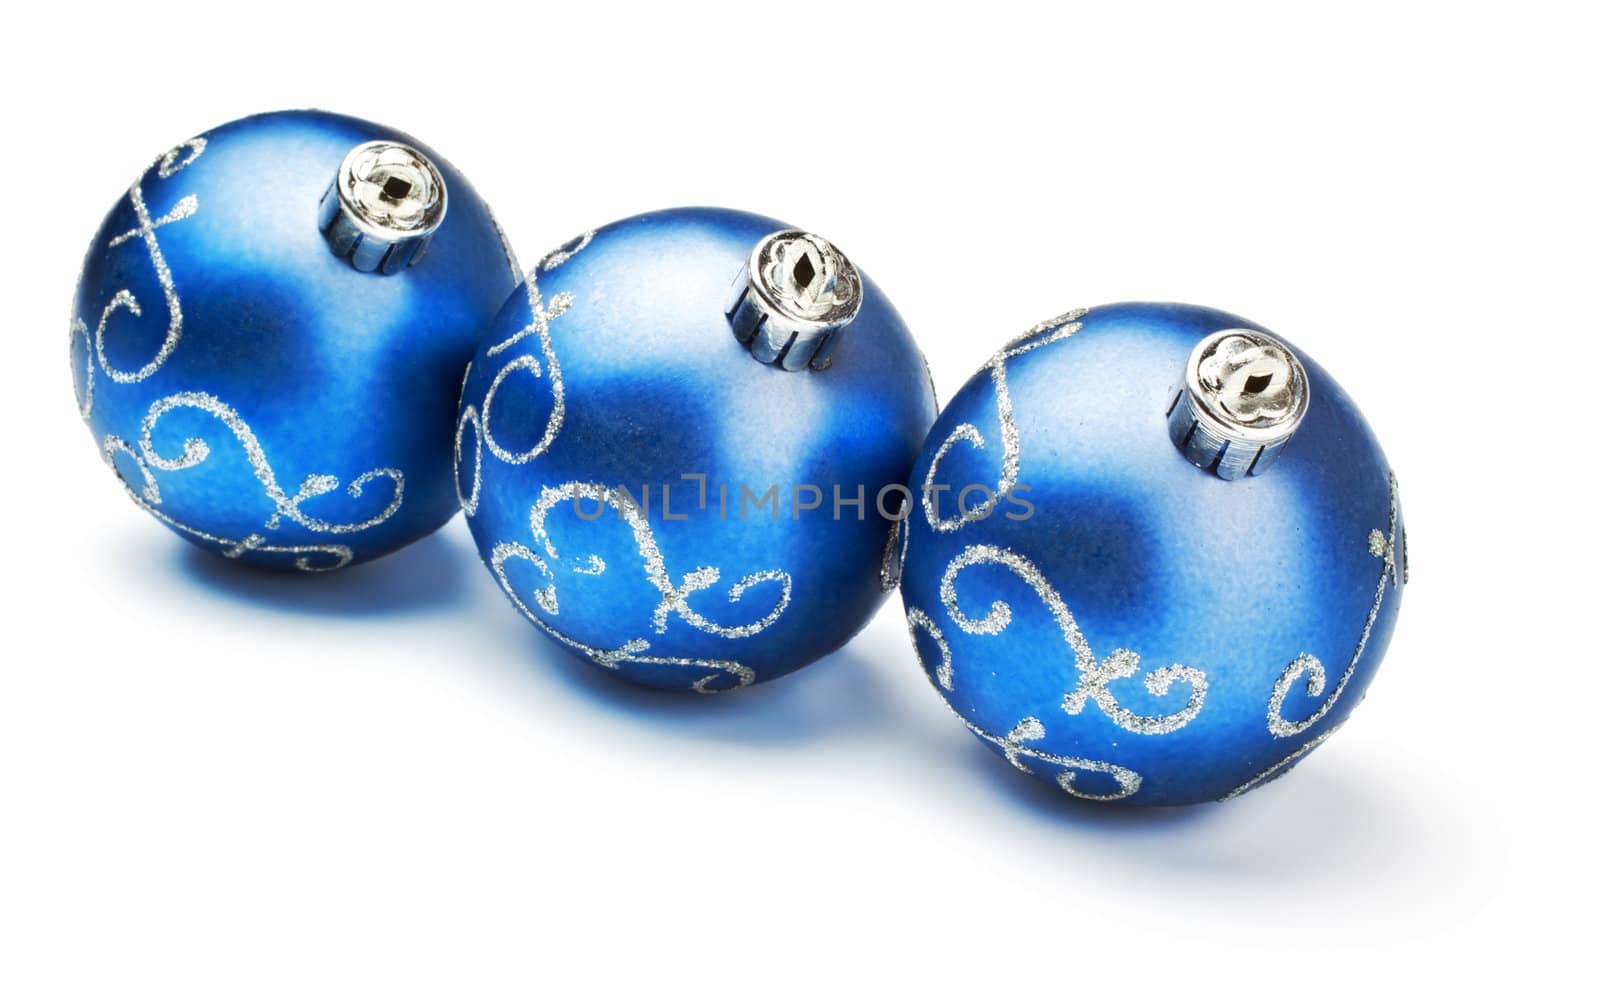 three blue decoration balls by petr_malyshev